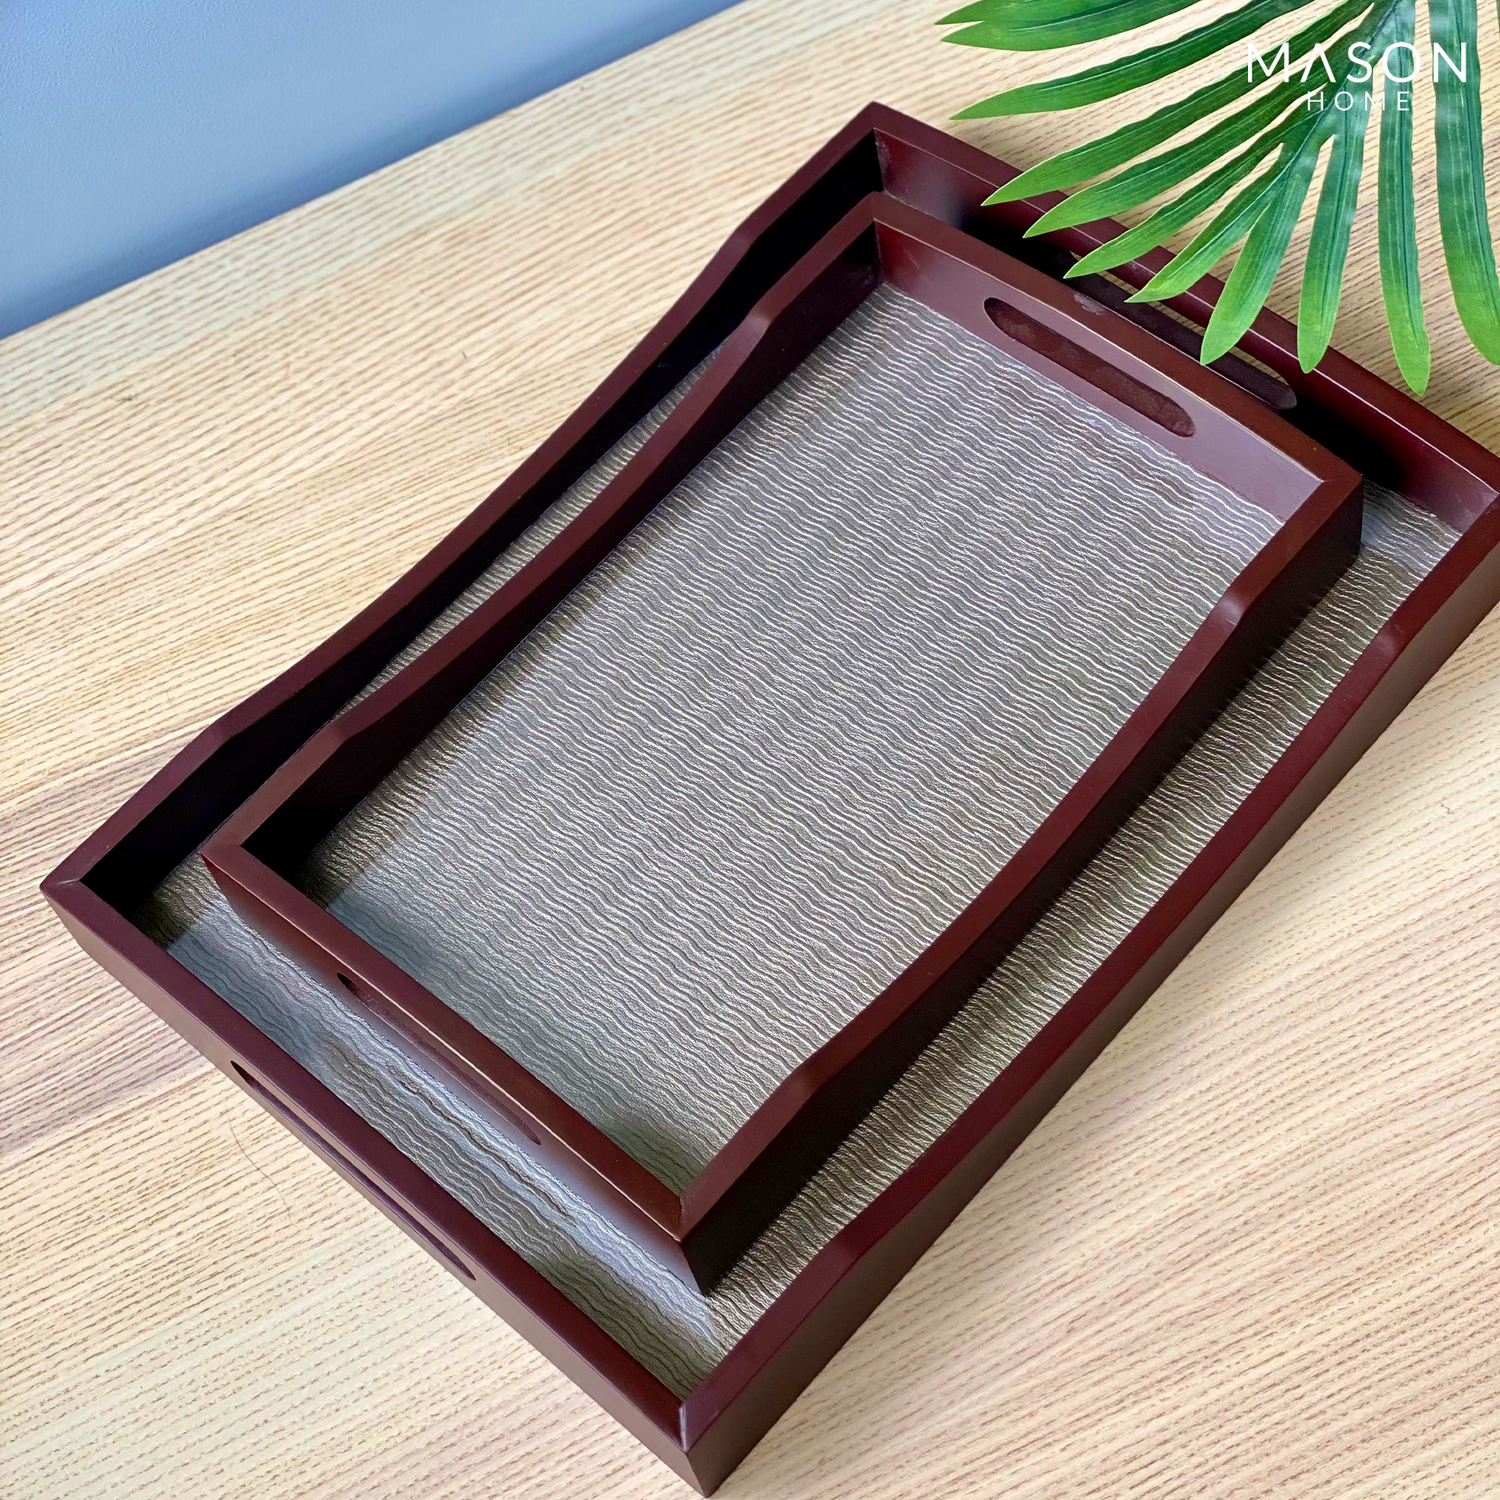 Metallic Textured Wood Trays - Set Of 2